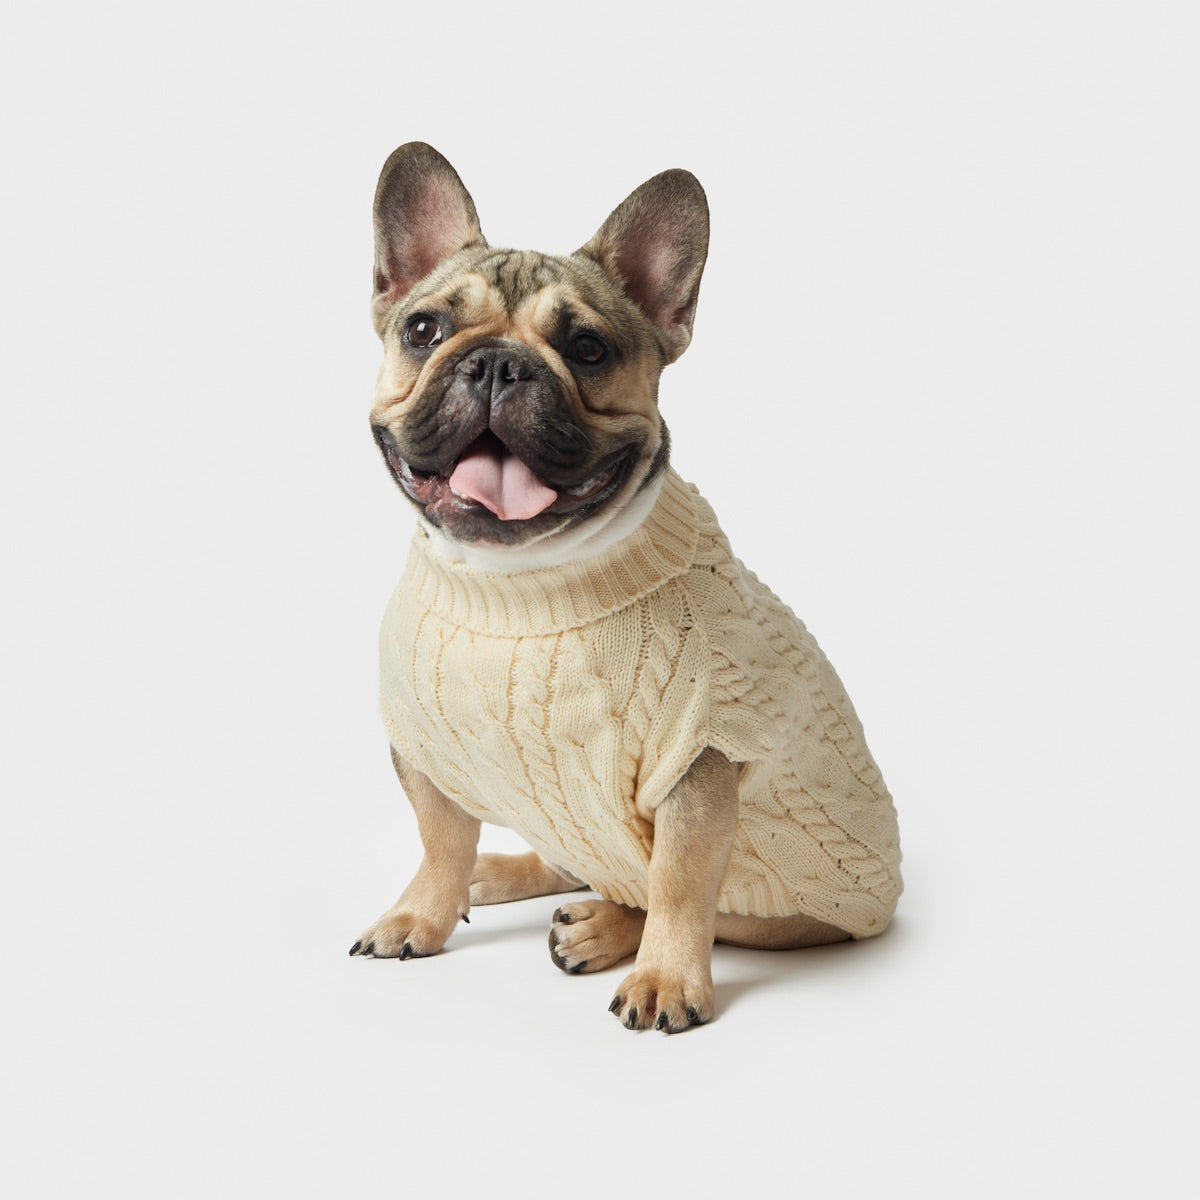 shinola-knit-dog-sweater-ivory